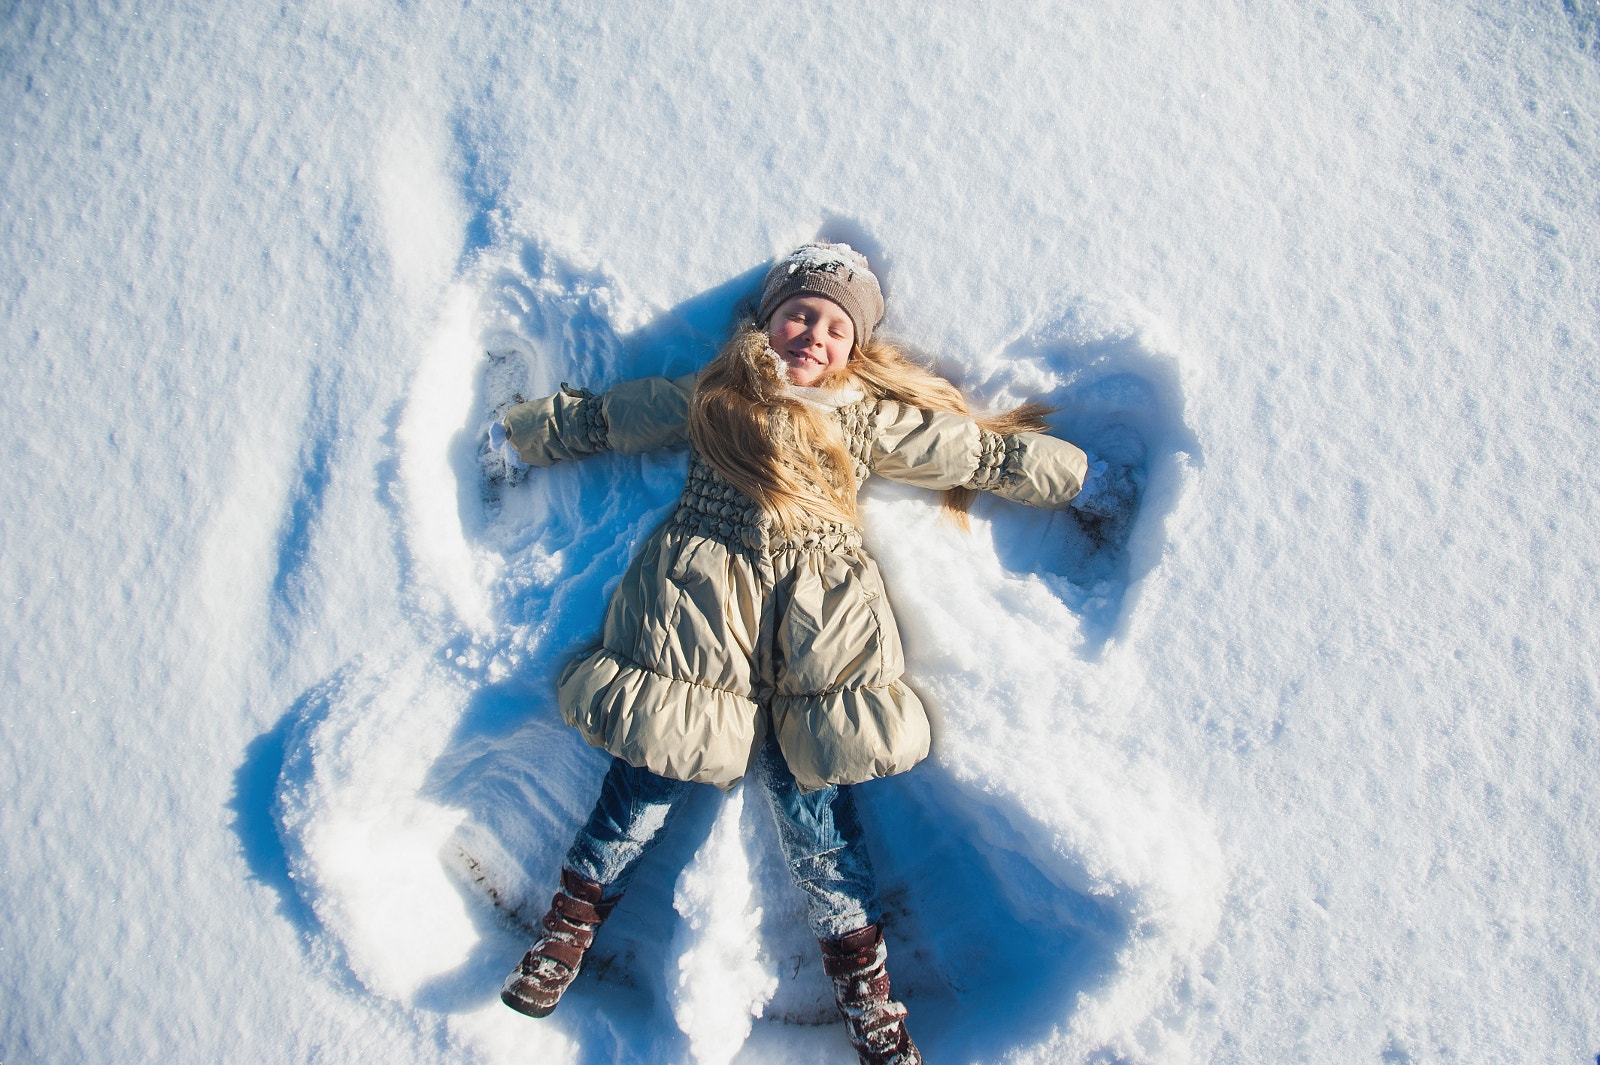  fun photos help beat winter blues 